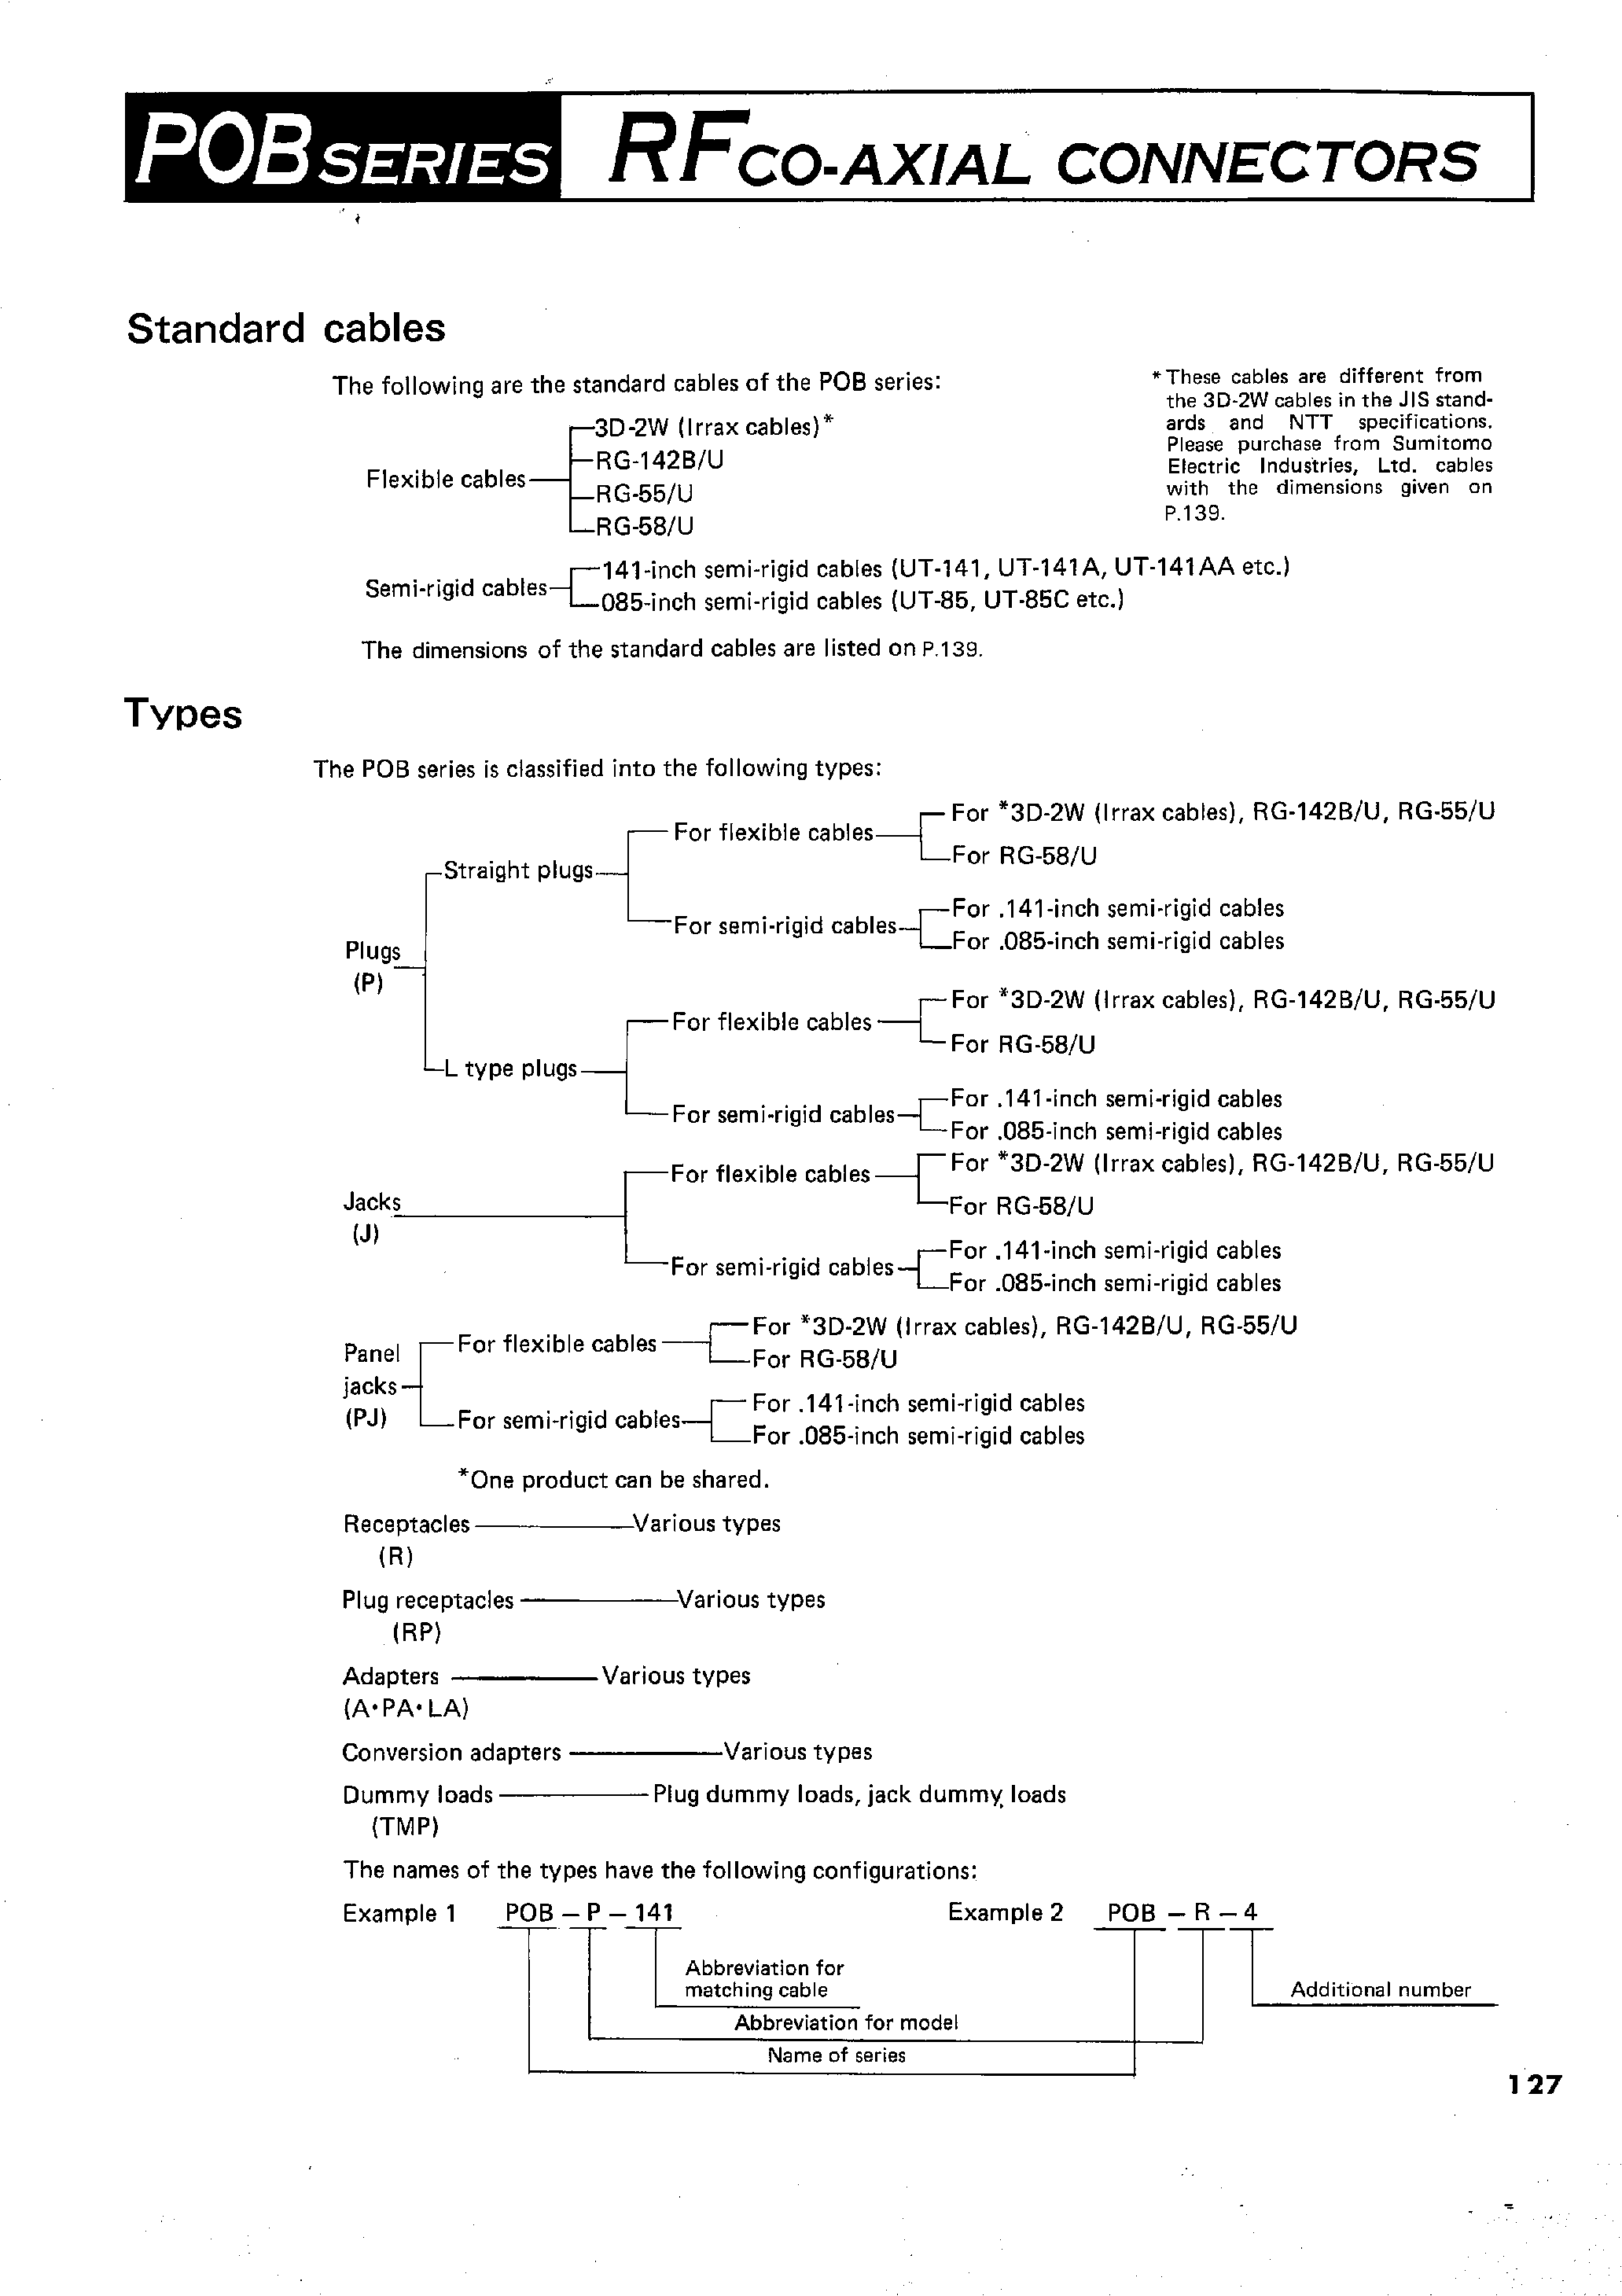 Datasheet POB-J-141 - RFCO-AXIAL CONNECTORS page 2